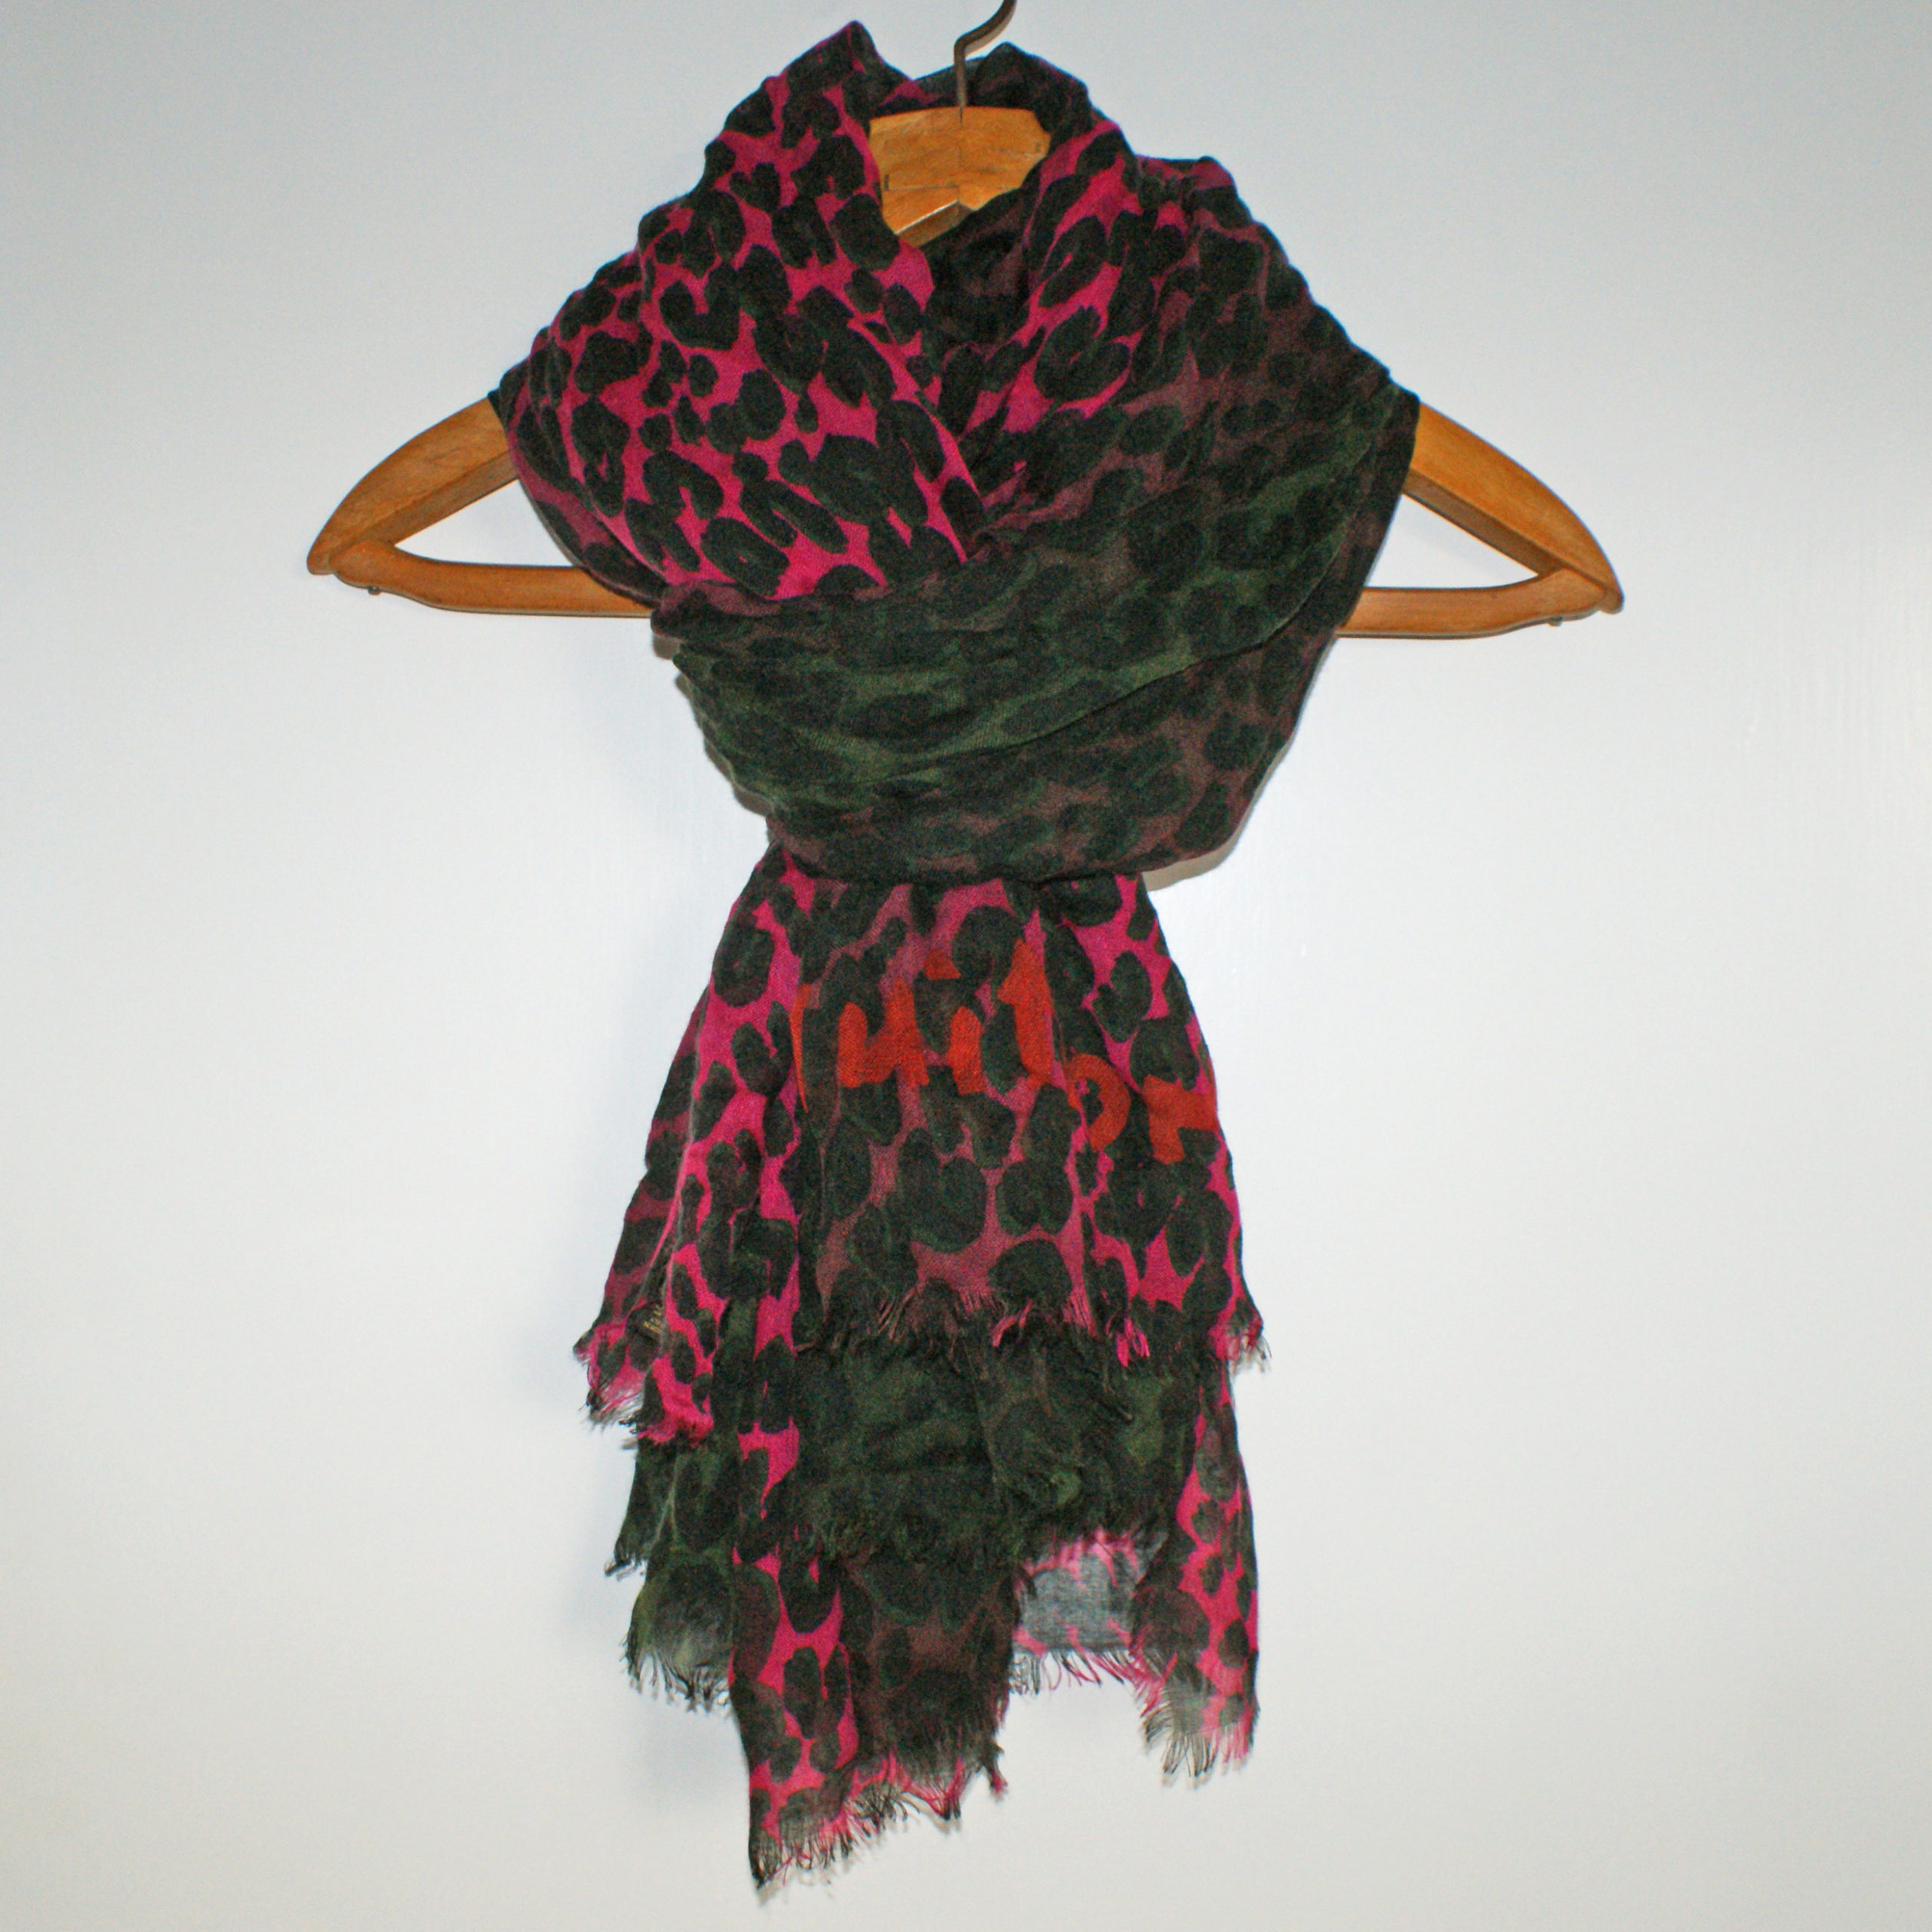 Louis Vuitton leopard scarf  Moda, Looks com lenços, Looks